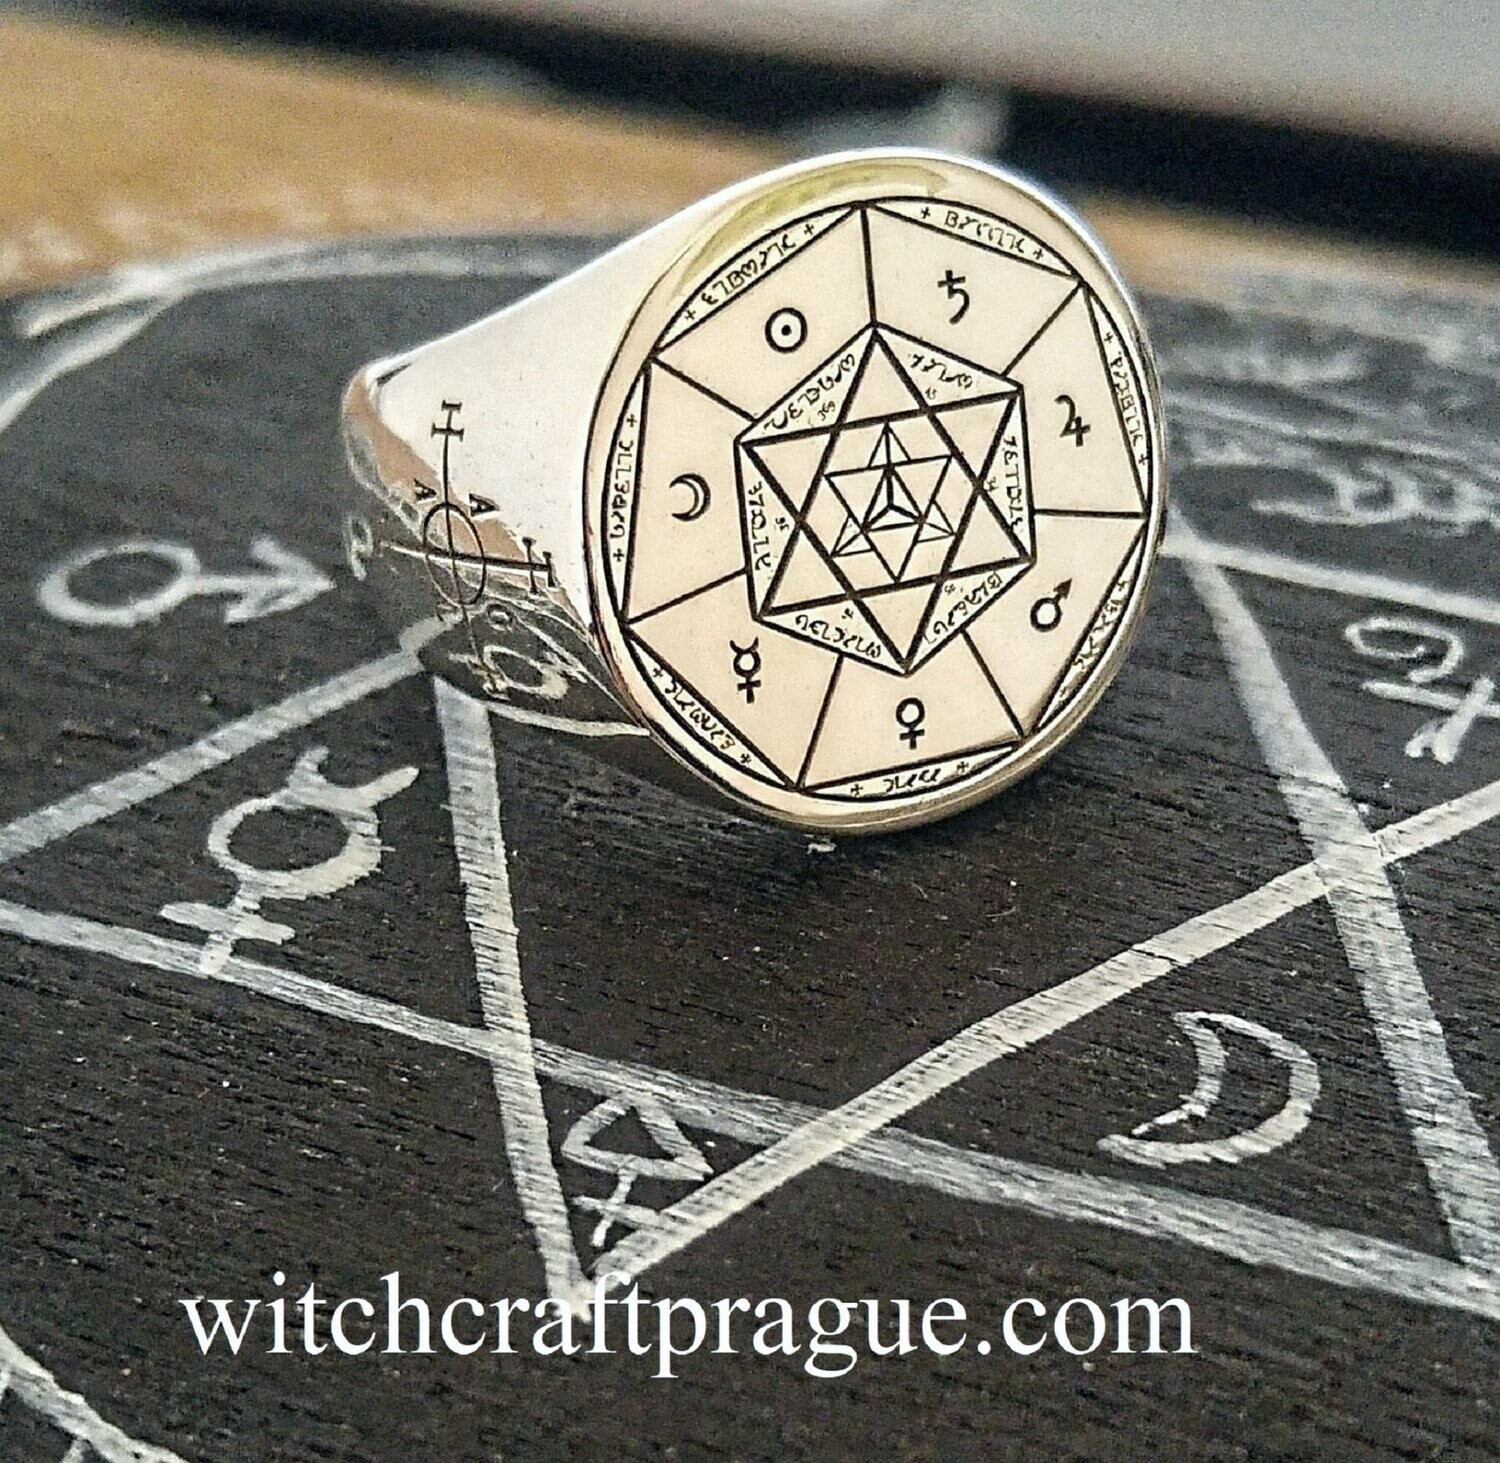 Witchcraft archangels seal ring talisman